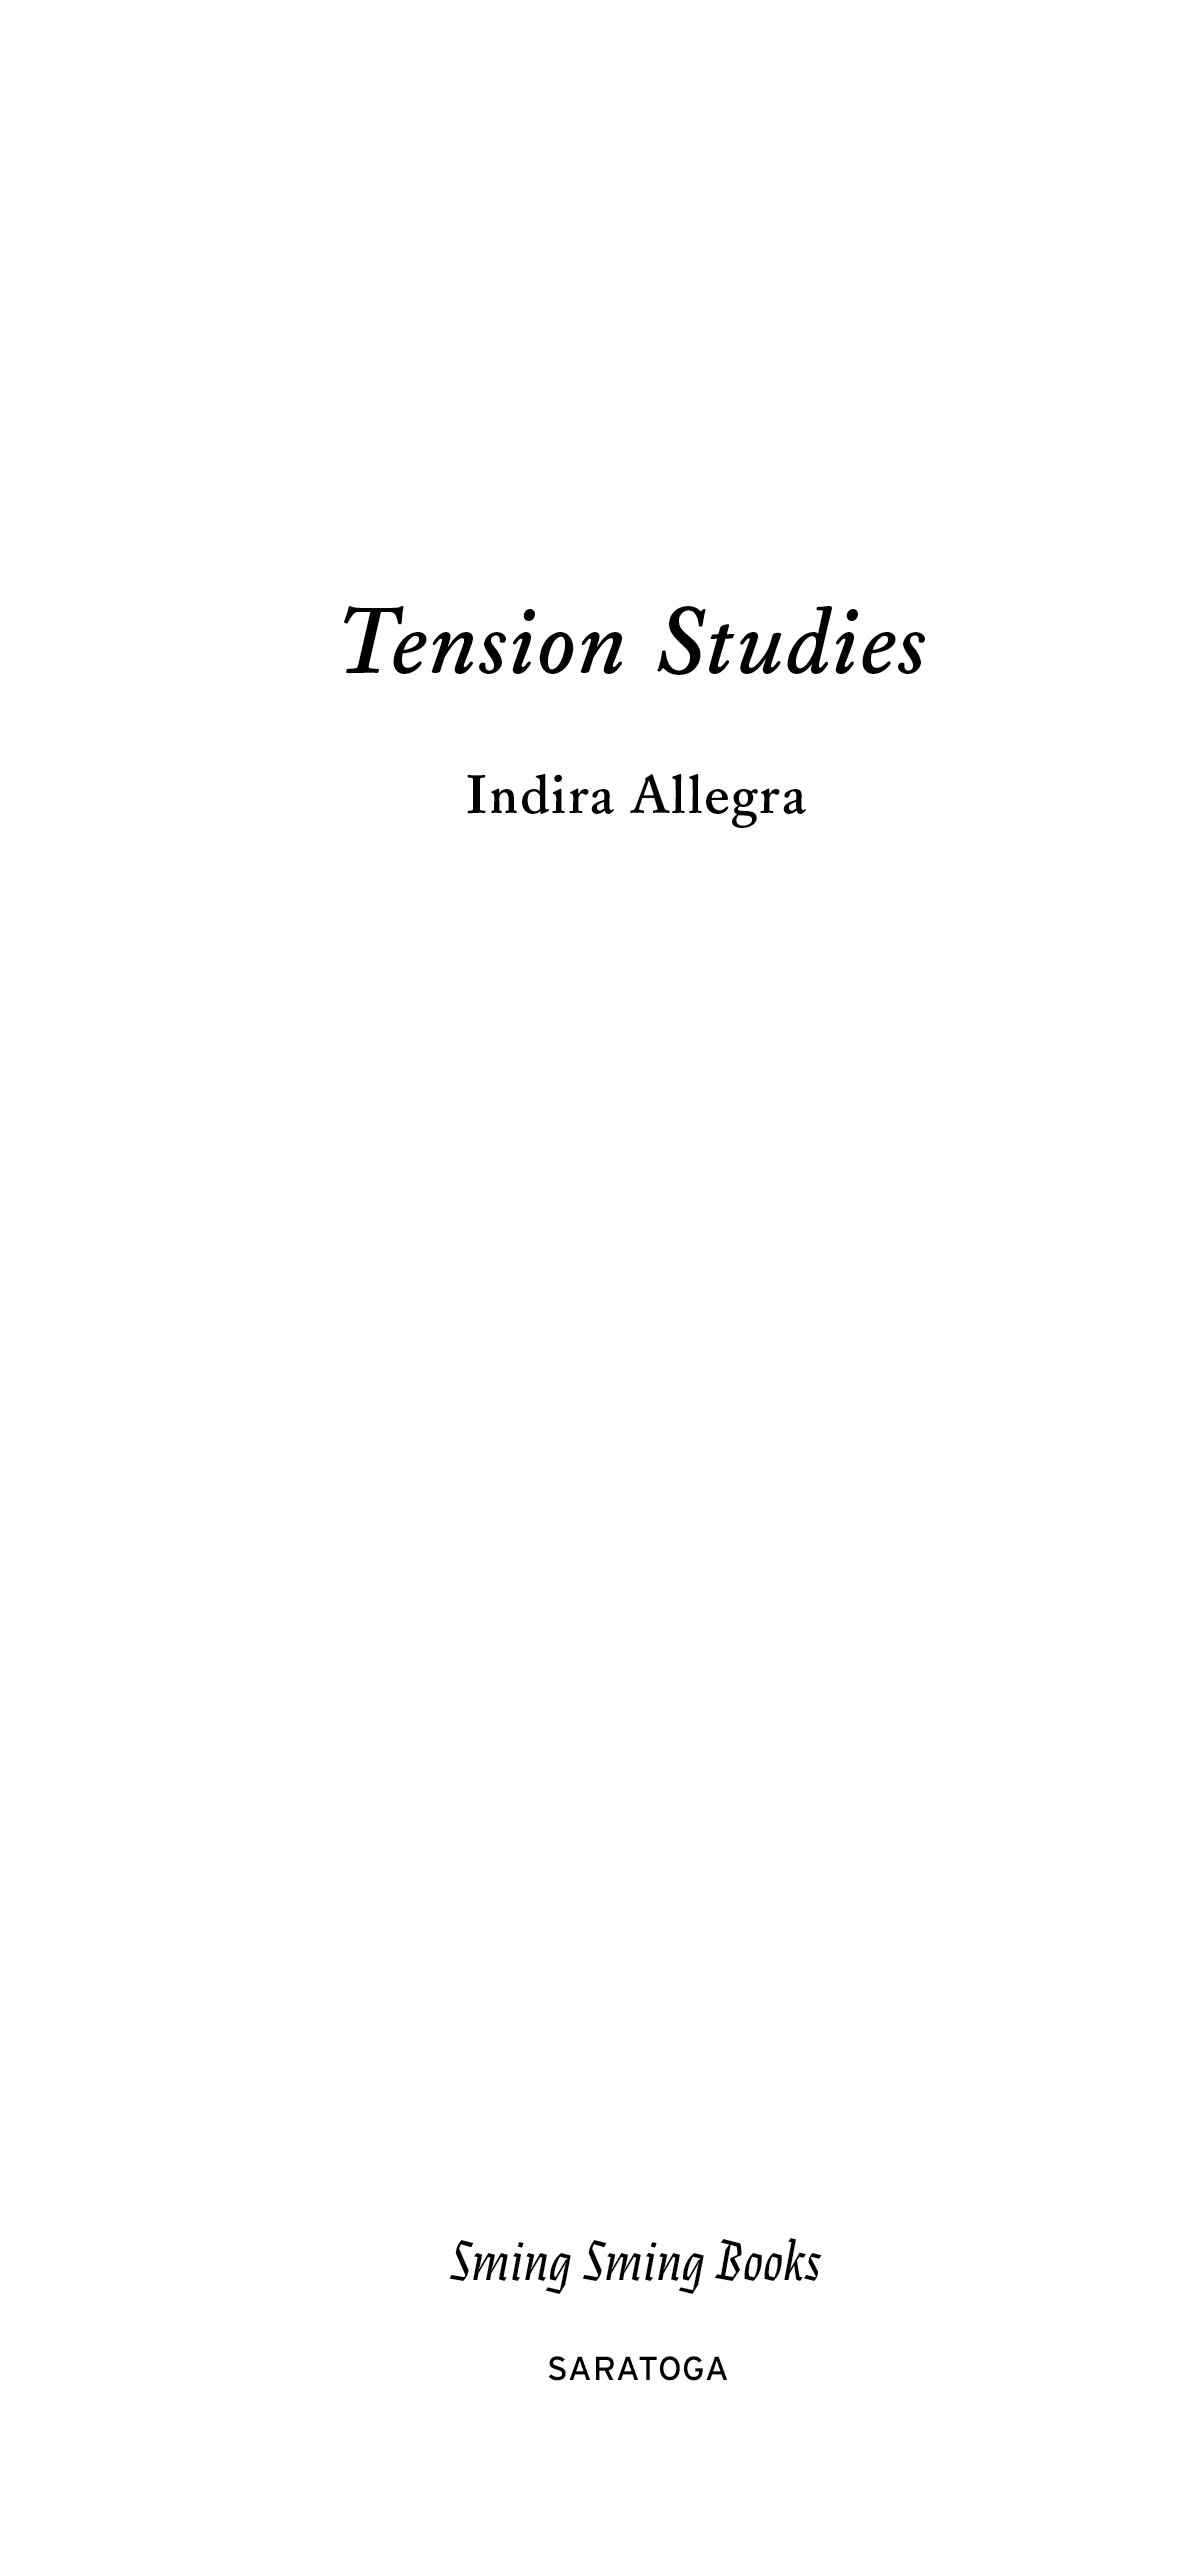 indira-allegra_tension-studies_3.jpg